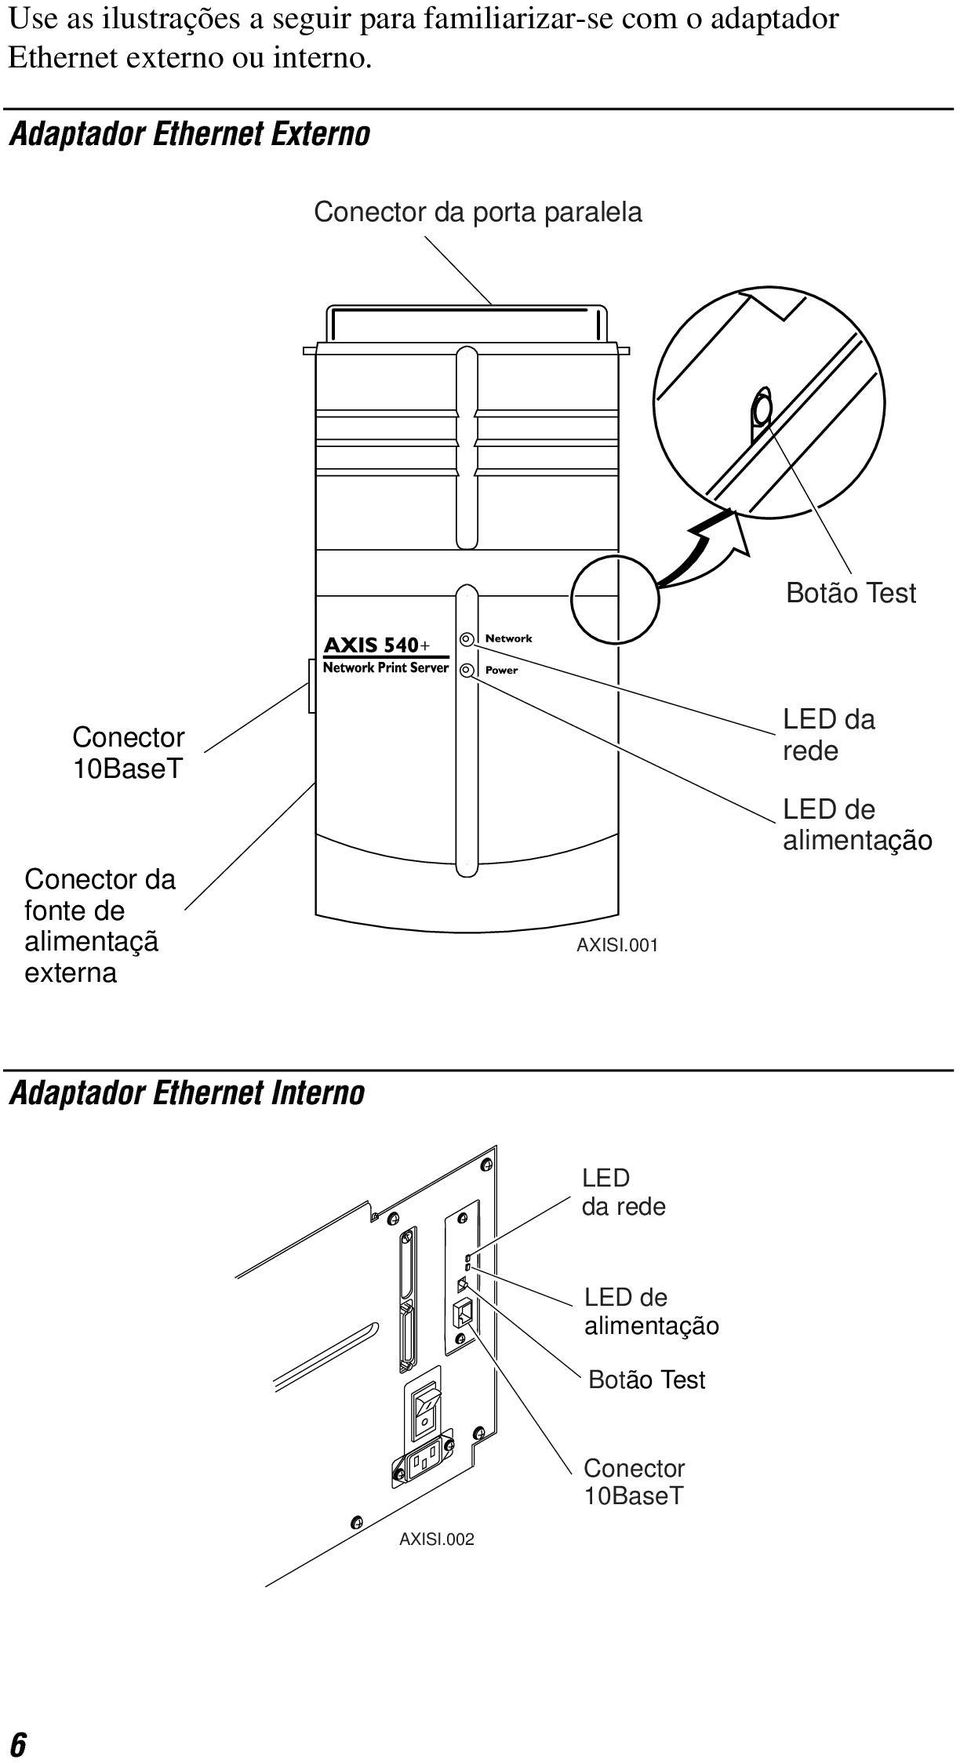 Adaptador Ethernet Externo Conector da porta paralela + Botão Test Conector 10BaseT